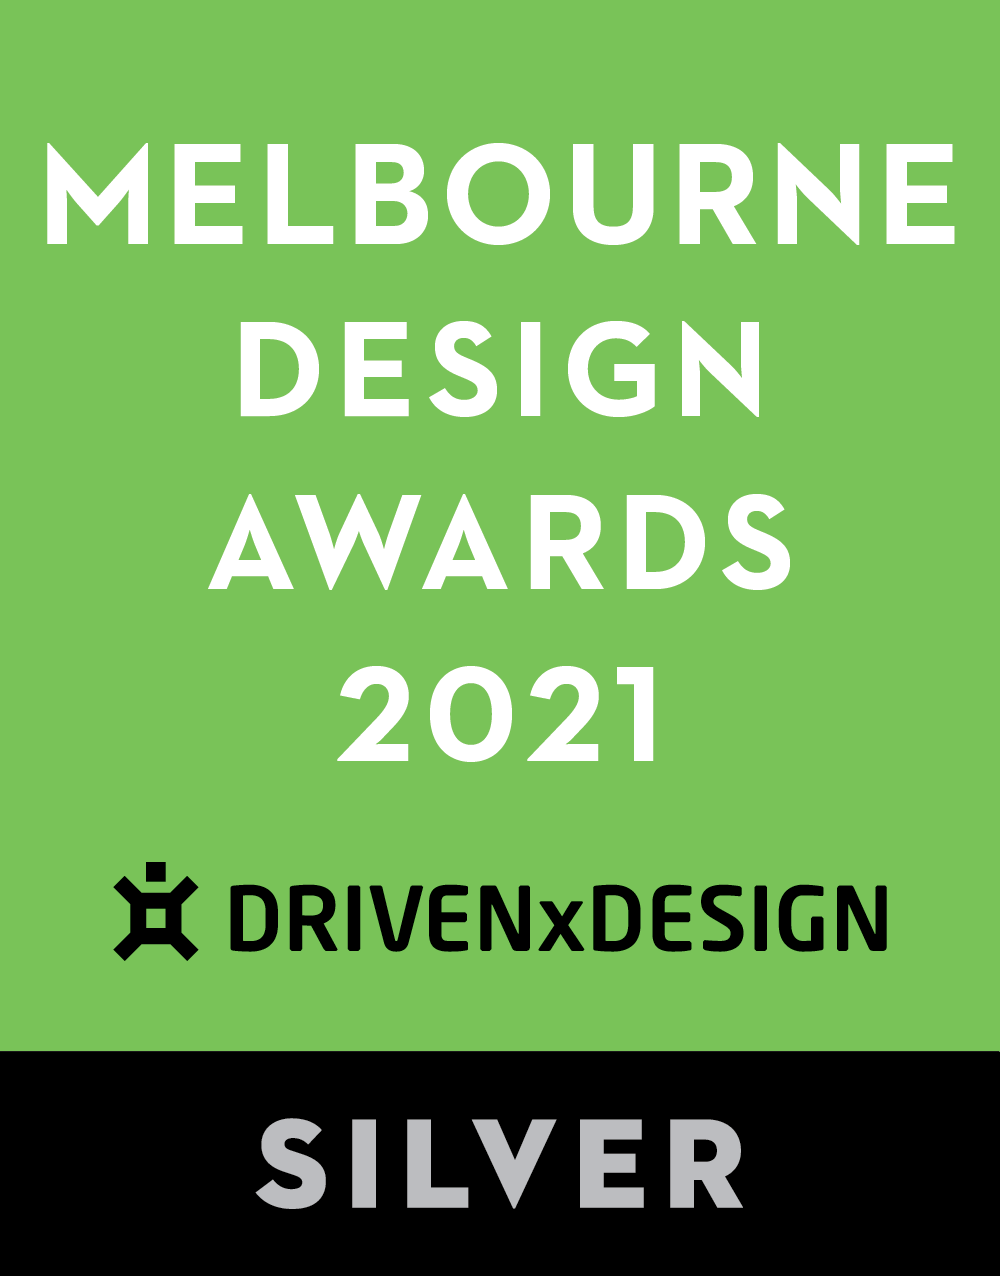 Melbourne design awards 2021 silver